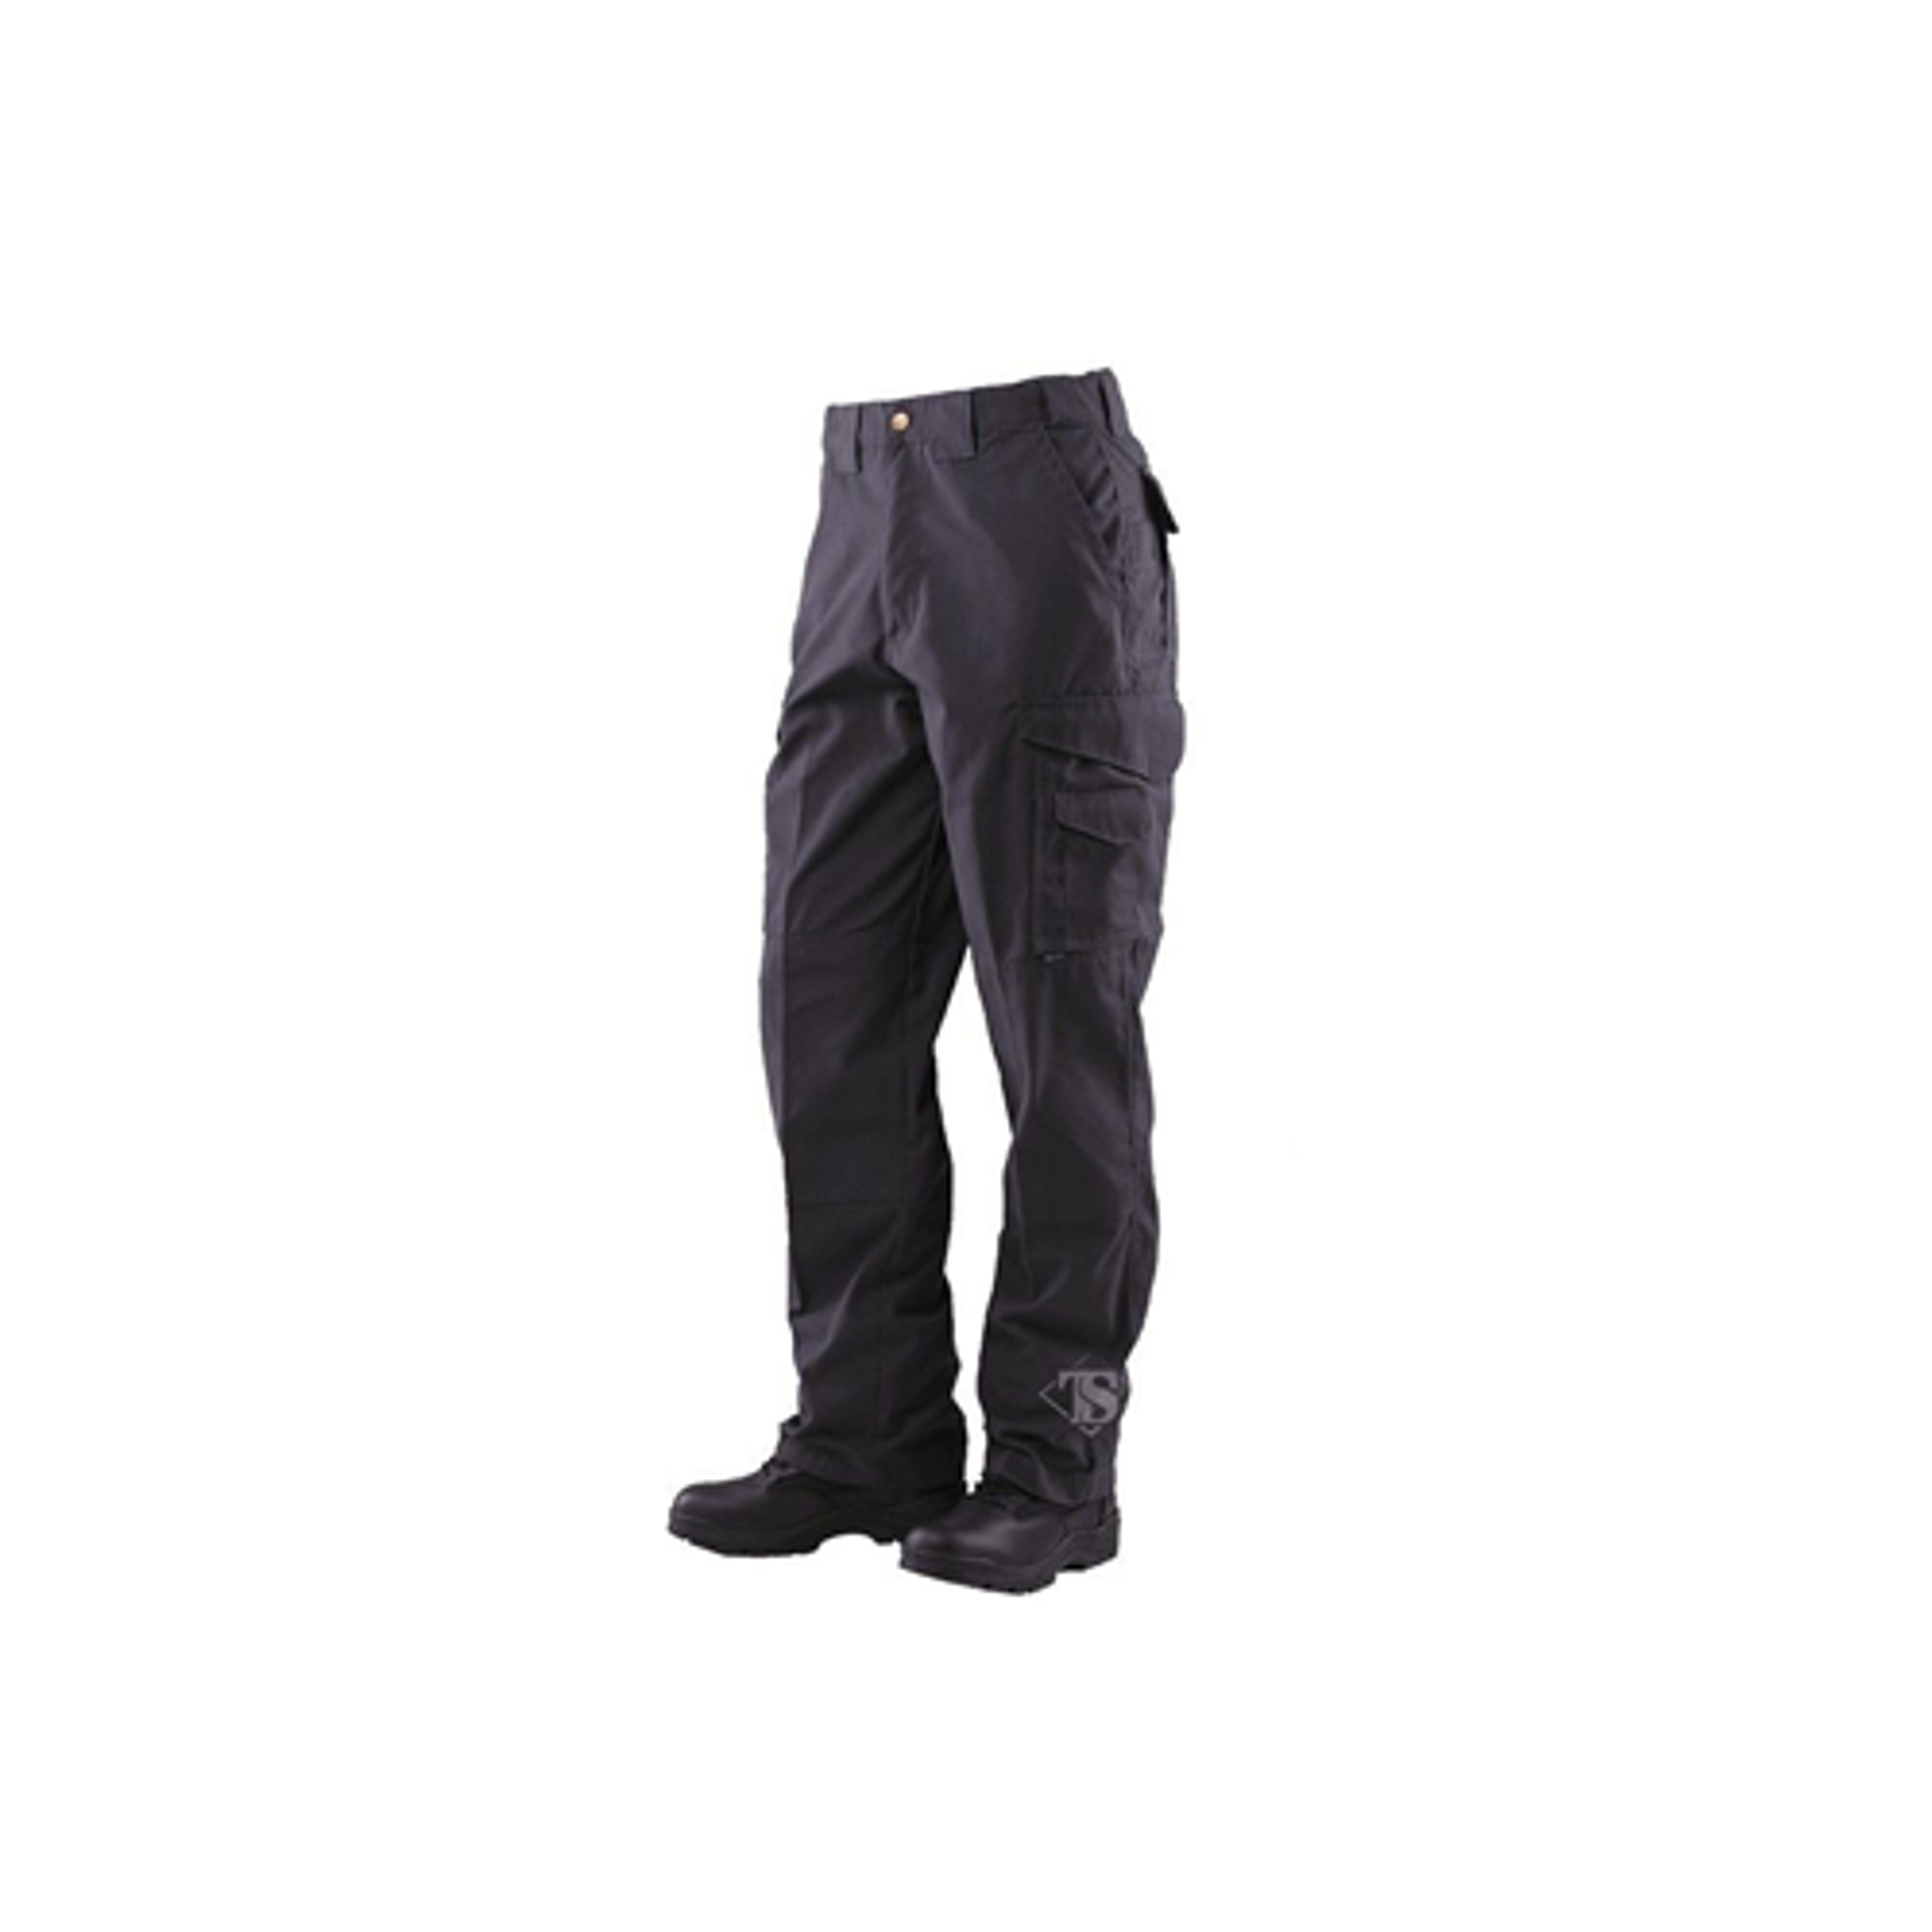 24-7 Original Tactical Pants - 6.5oz - Black - KRTSP-1062030